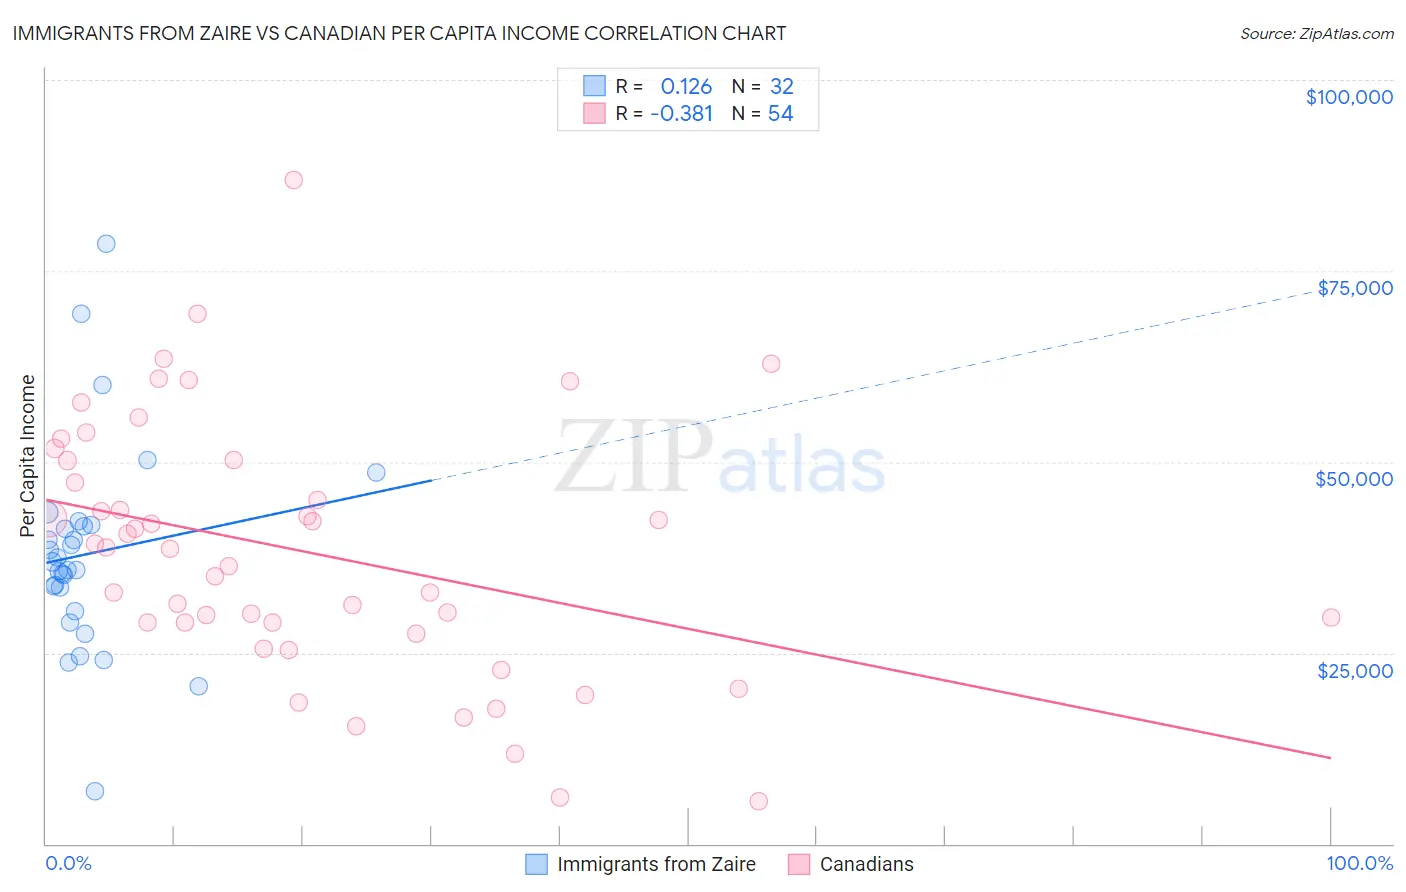 Immigrants from Zaire vs Canadian Per Capita Income